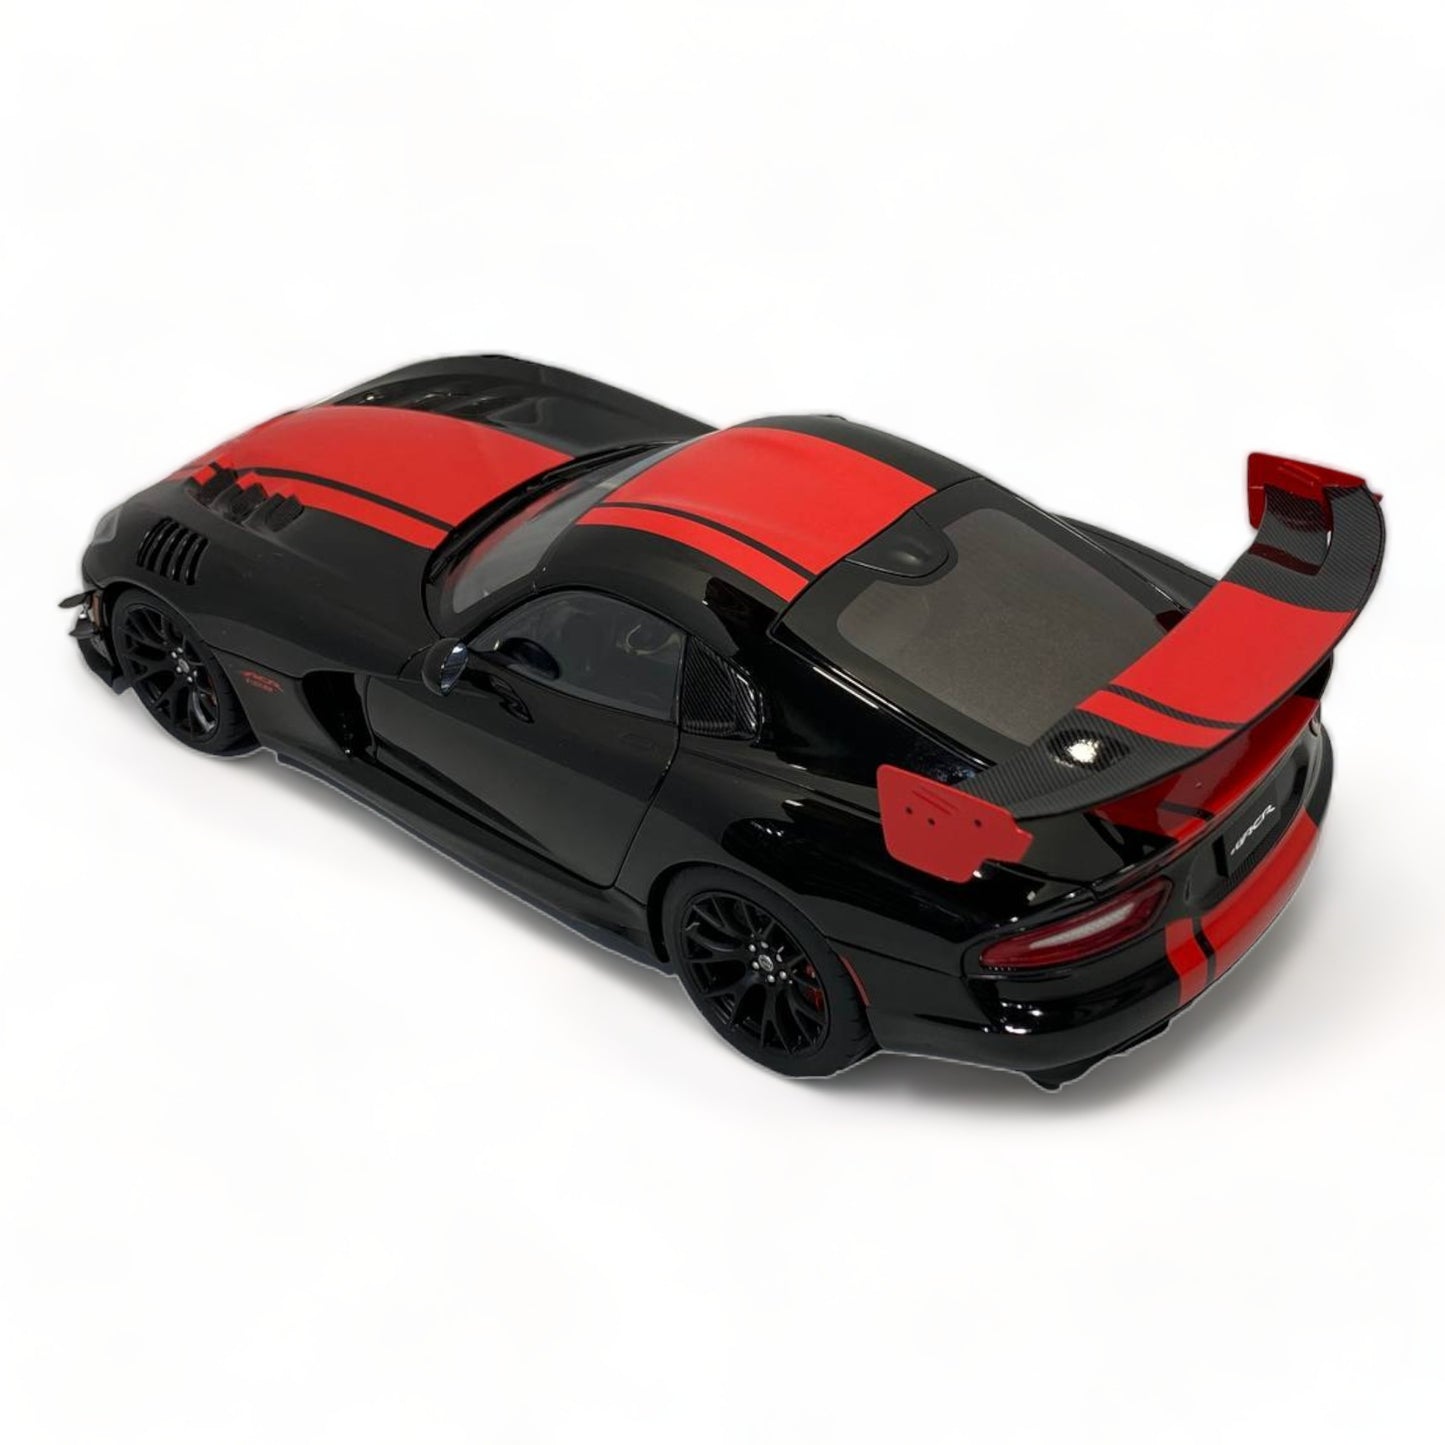 Autoart Dodge Viper ACR 1/18 Scale - Sleek Black/Red (2017)|Sold in Dturman.com Dubai UAE.